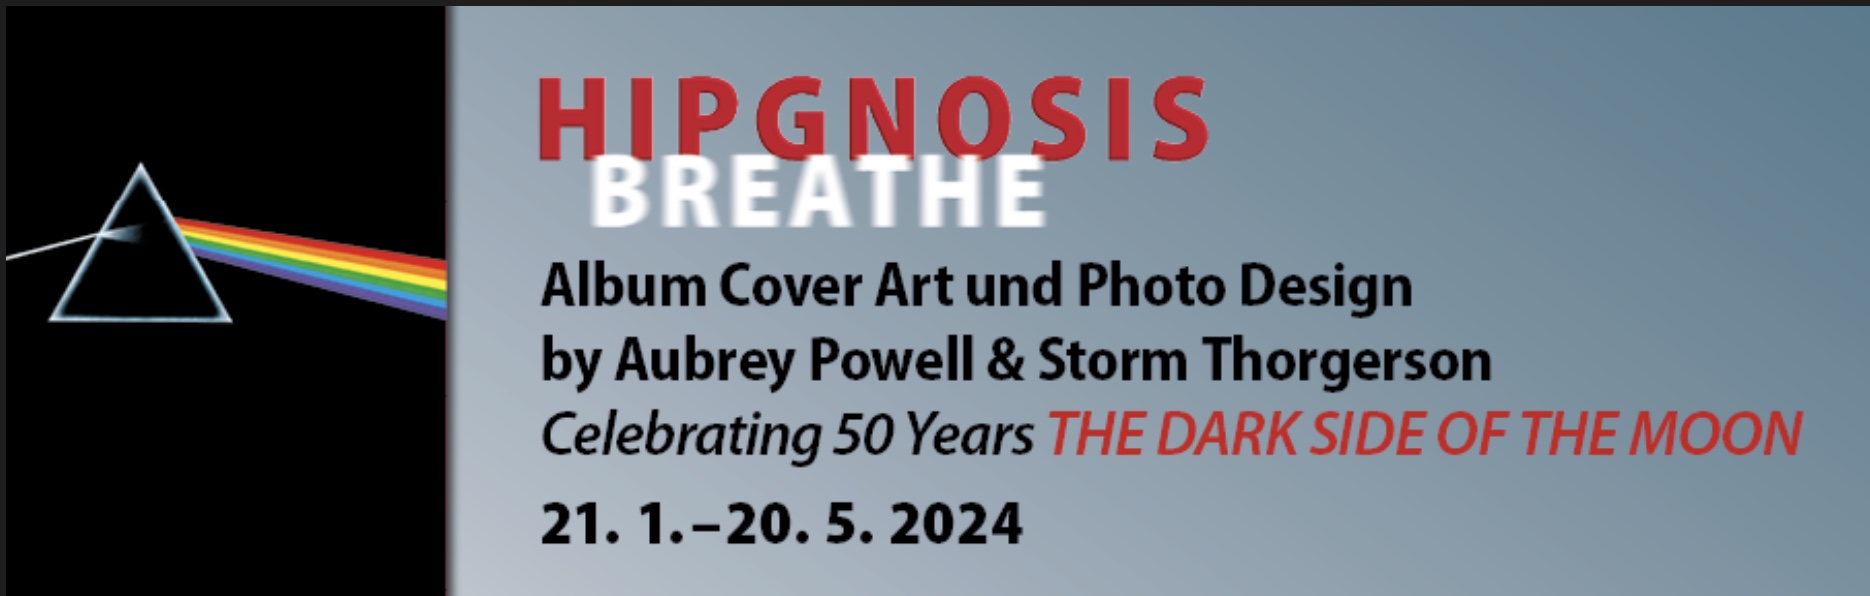 SAVE THE DATE: Pressekonferenz am 18. Januar 2024 um 11 Uhr zur Ausstellung „HIPGNOSIS.BREATHE – Album Cover Art